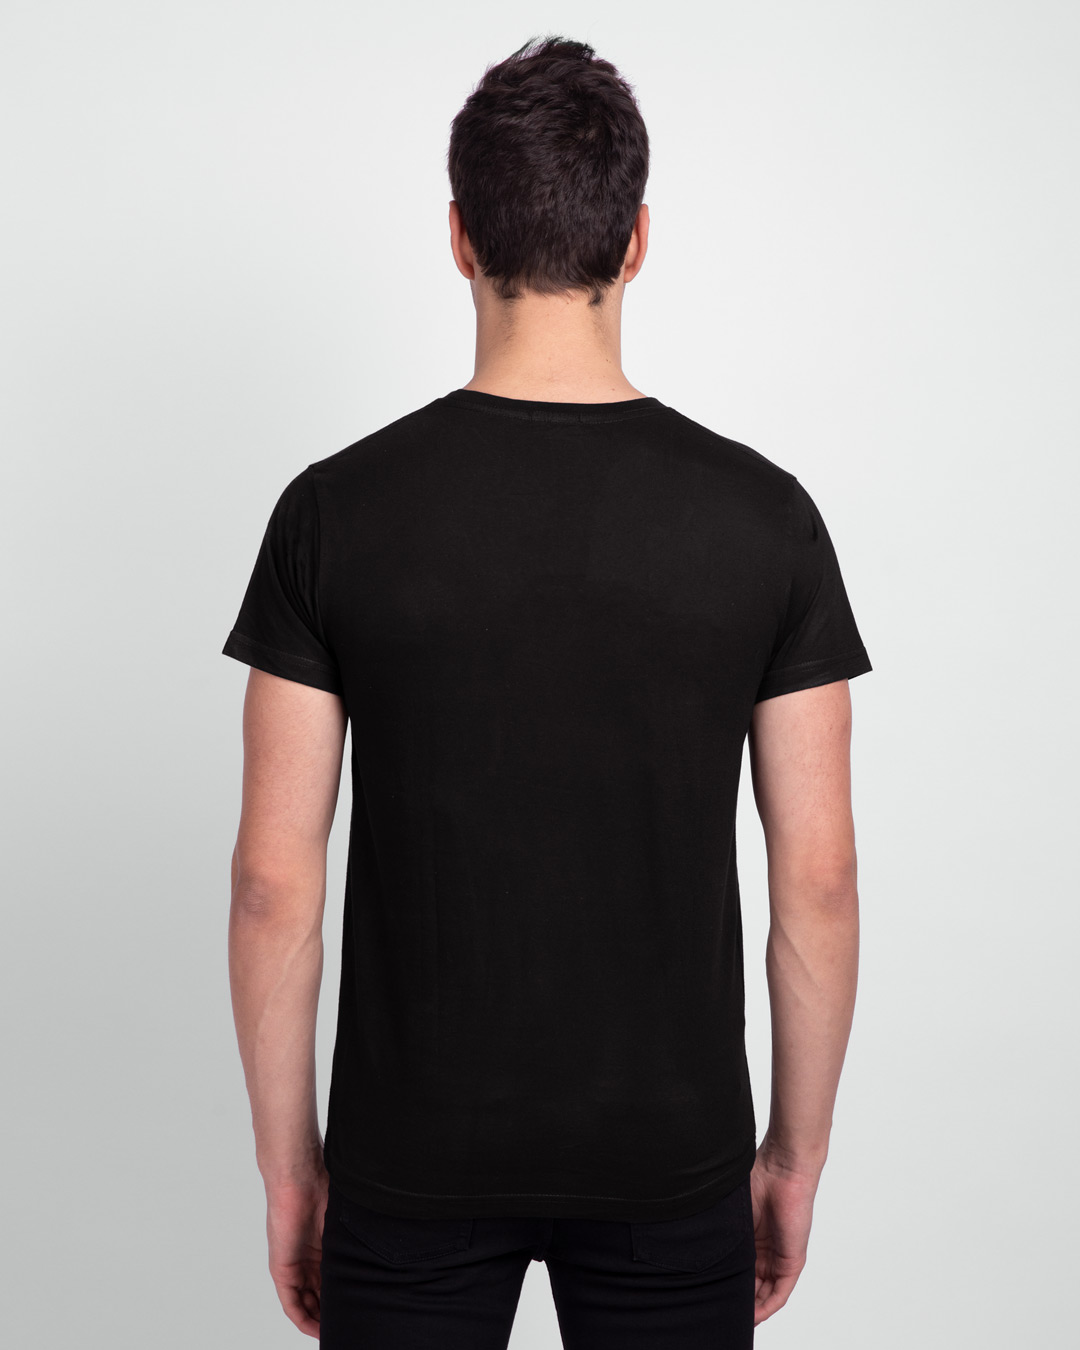 Shop Protect Home Half Sleeve T-Shirt Black-Back